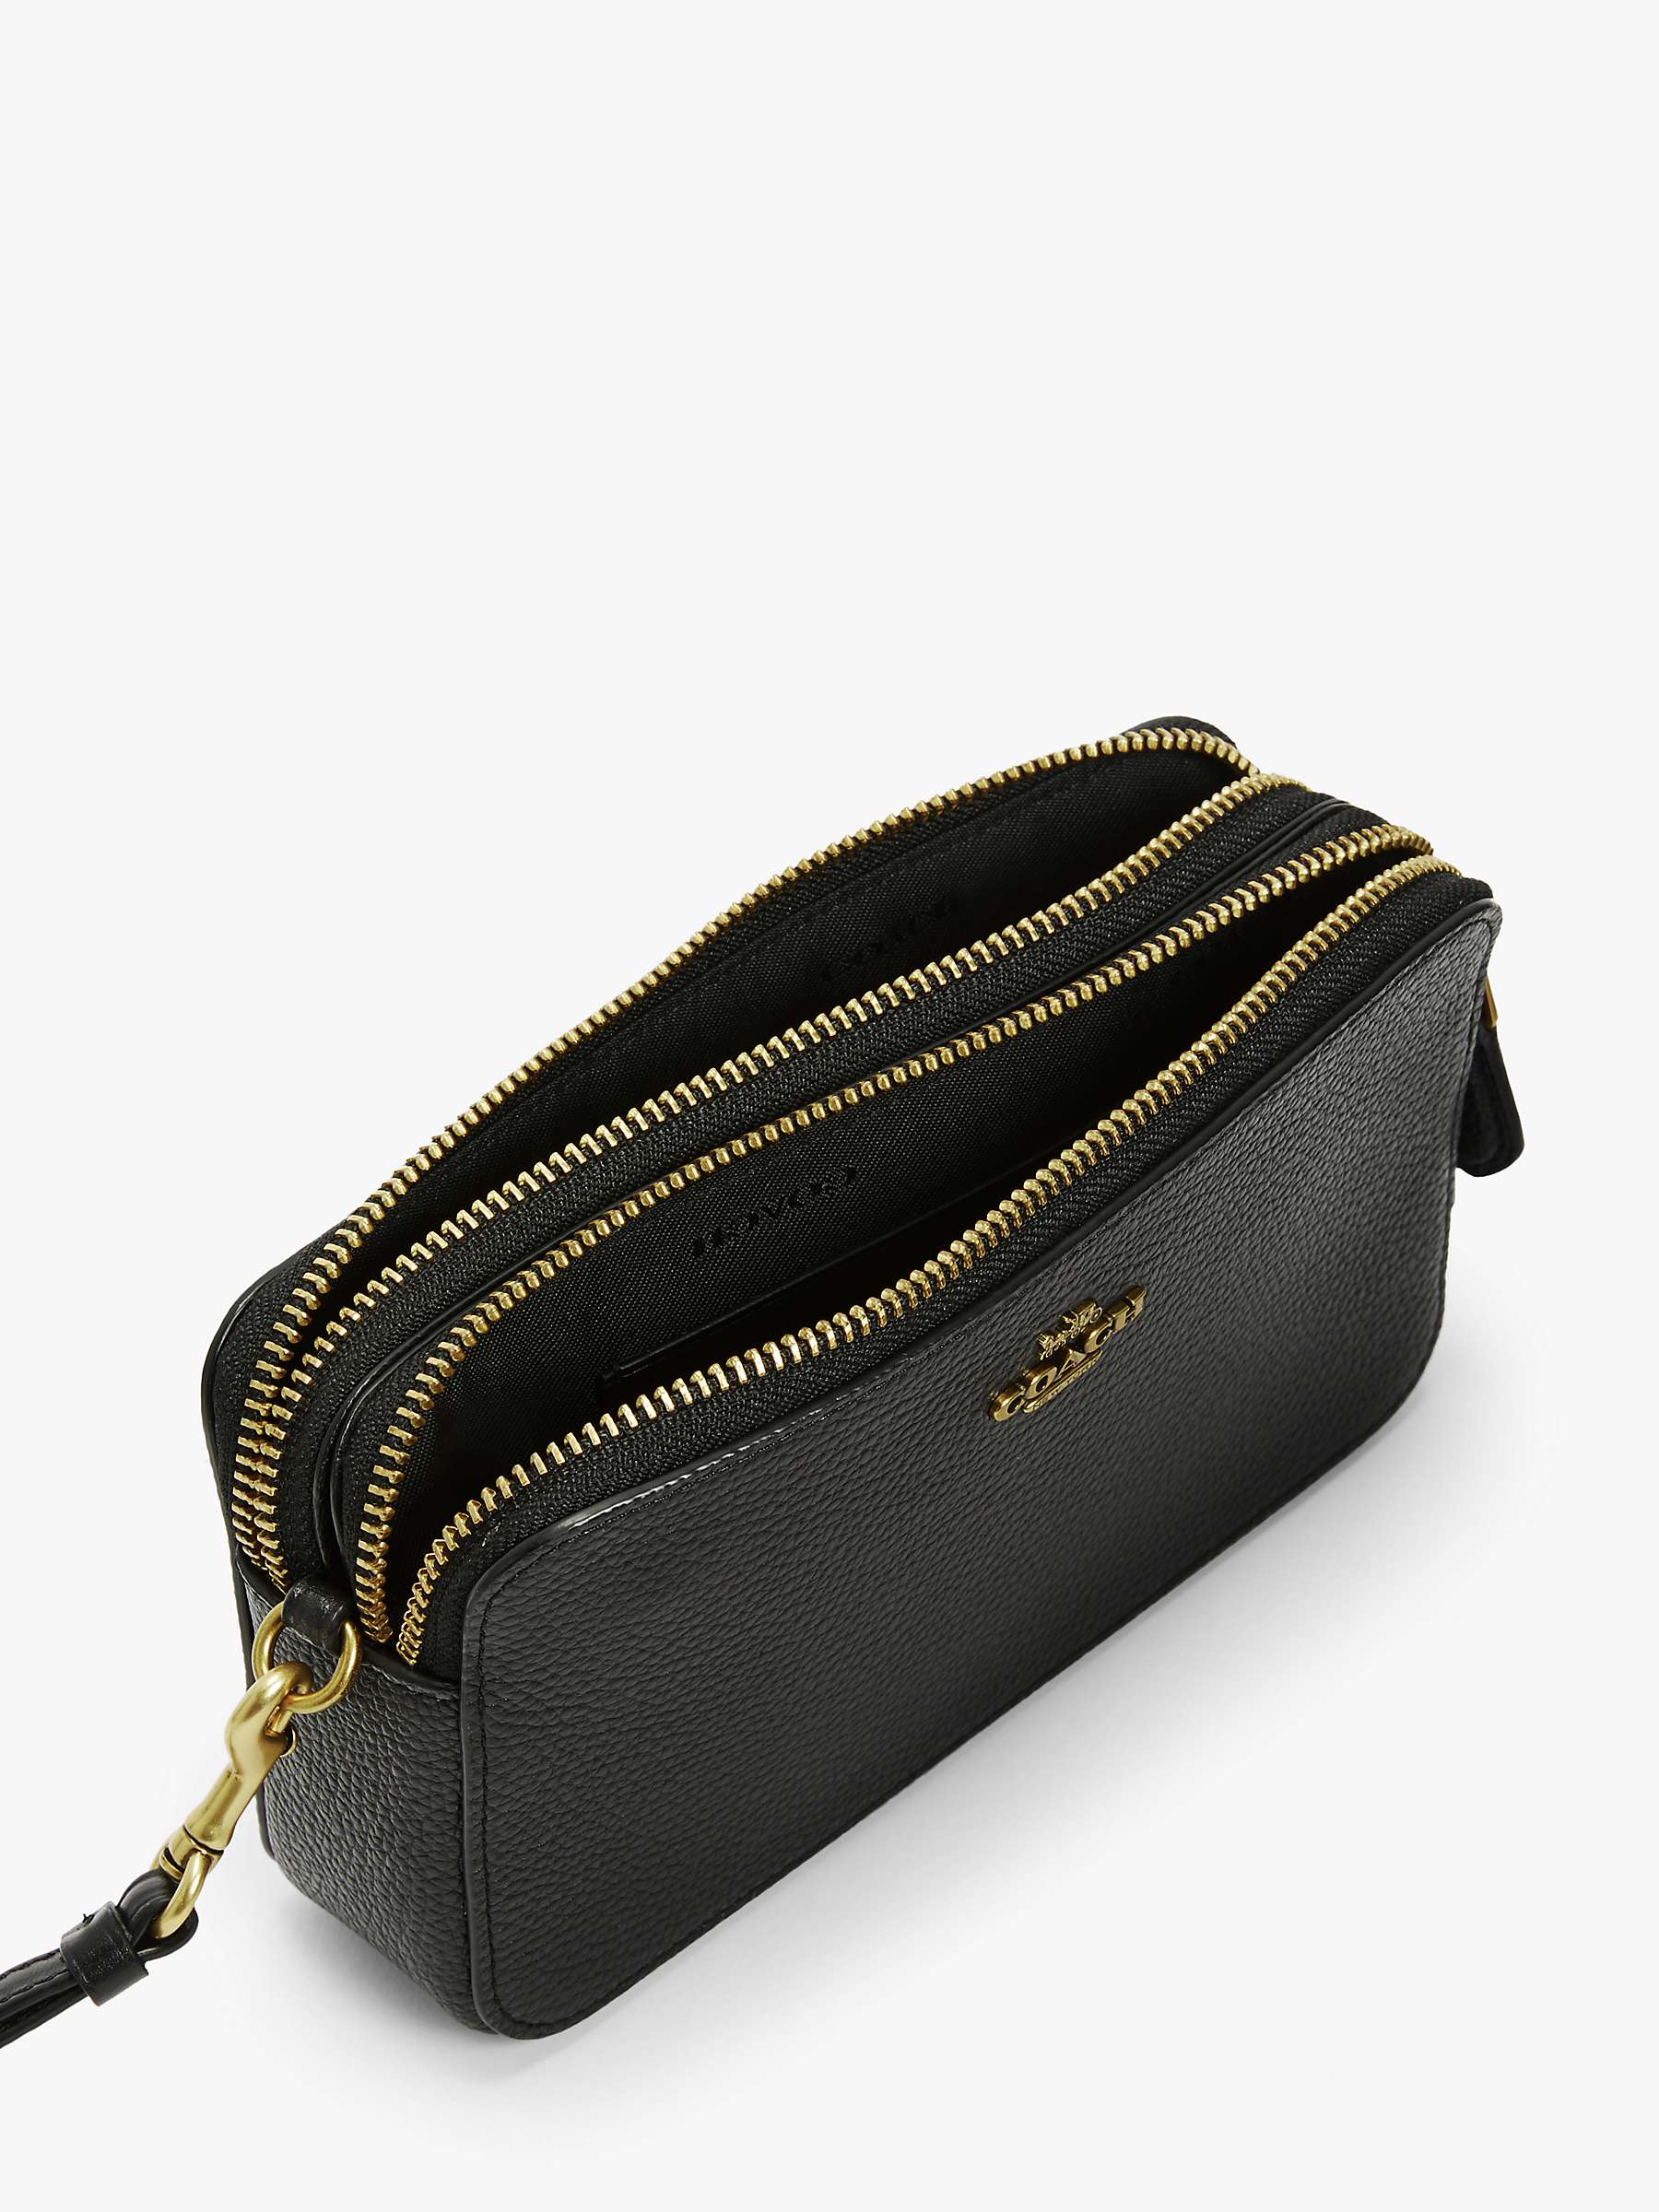 Buy Coach Kira Leather Cross Body Bag Online at johnlewis.com